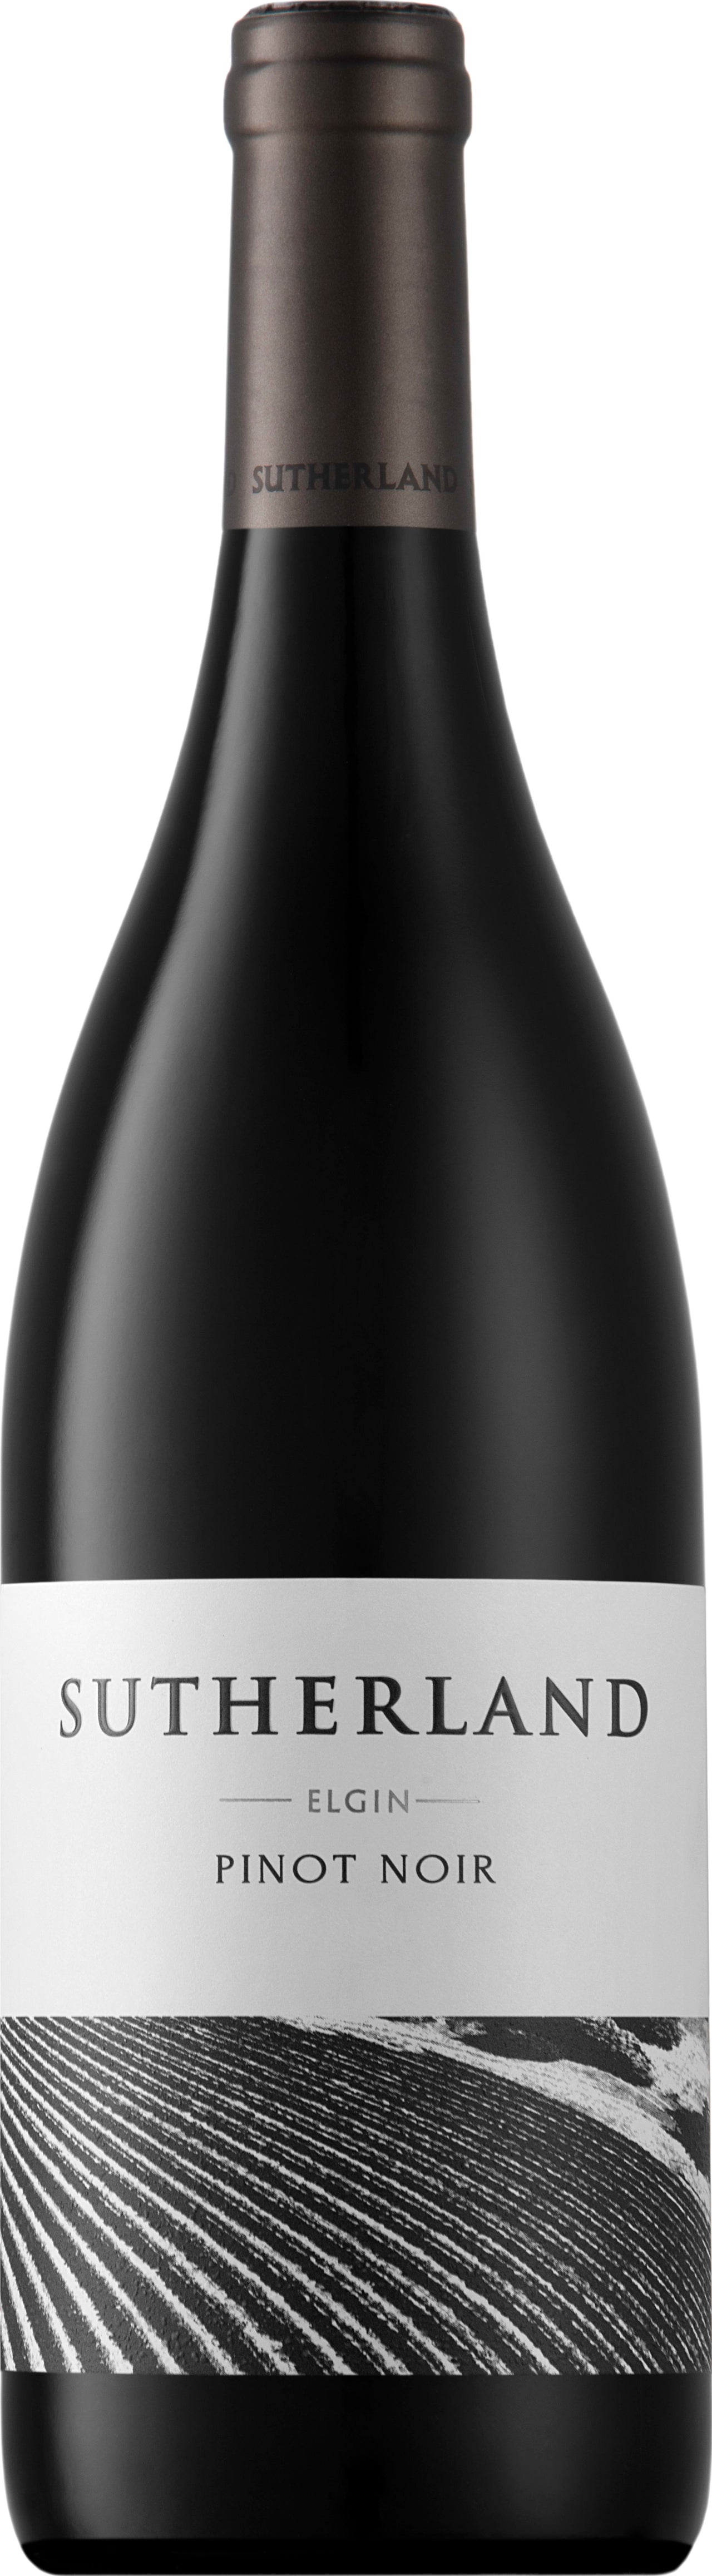 Thelema Mountain Vineyards Sutherland Pinot Noir 2020 75cl - Buy Thelema Mountain Vineyards Wines from GREAT WINES DIRECT wine shop